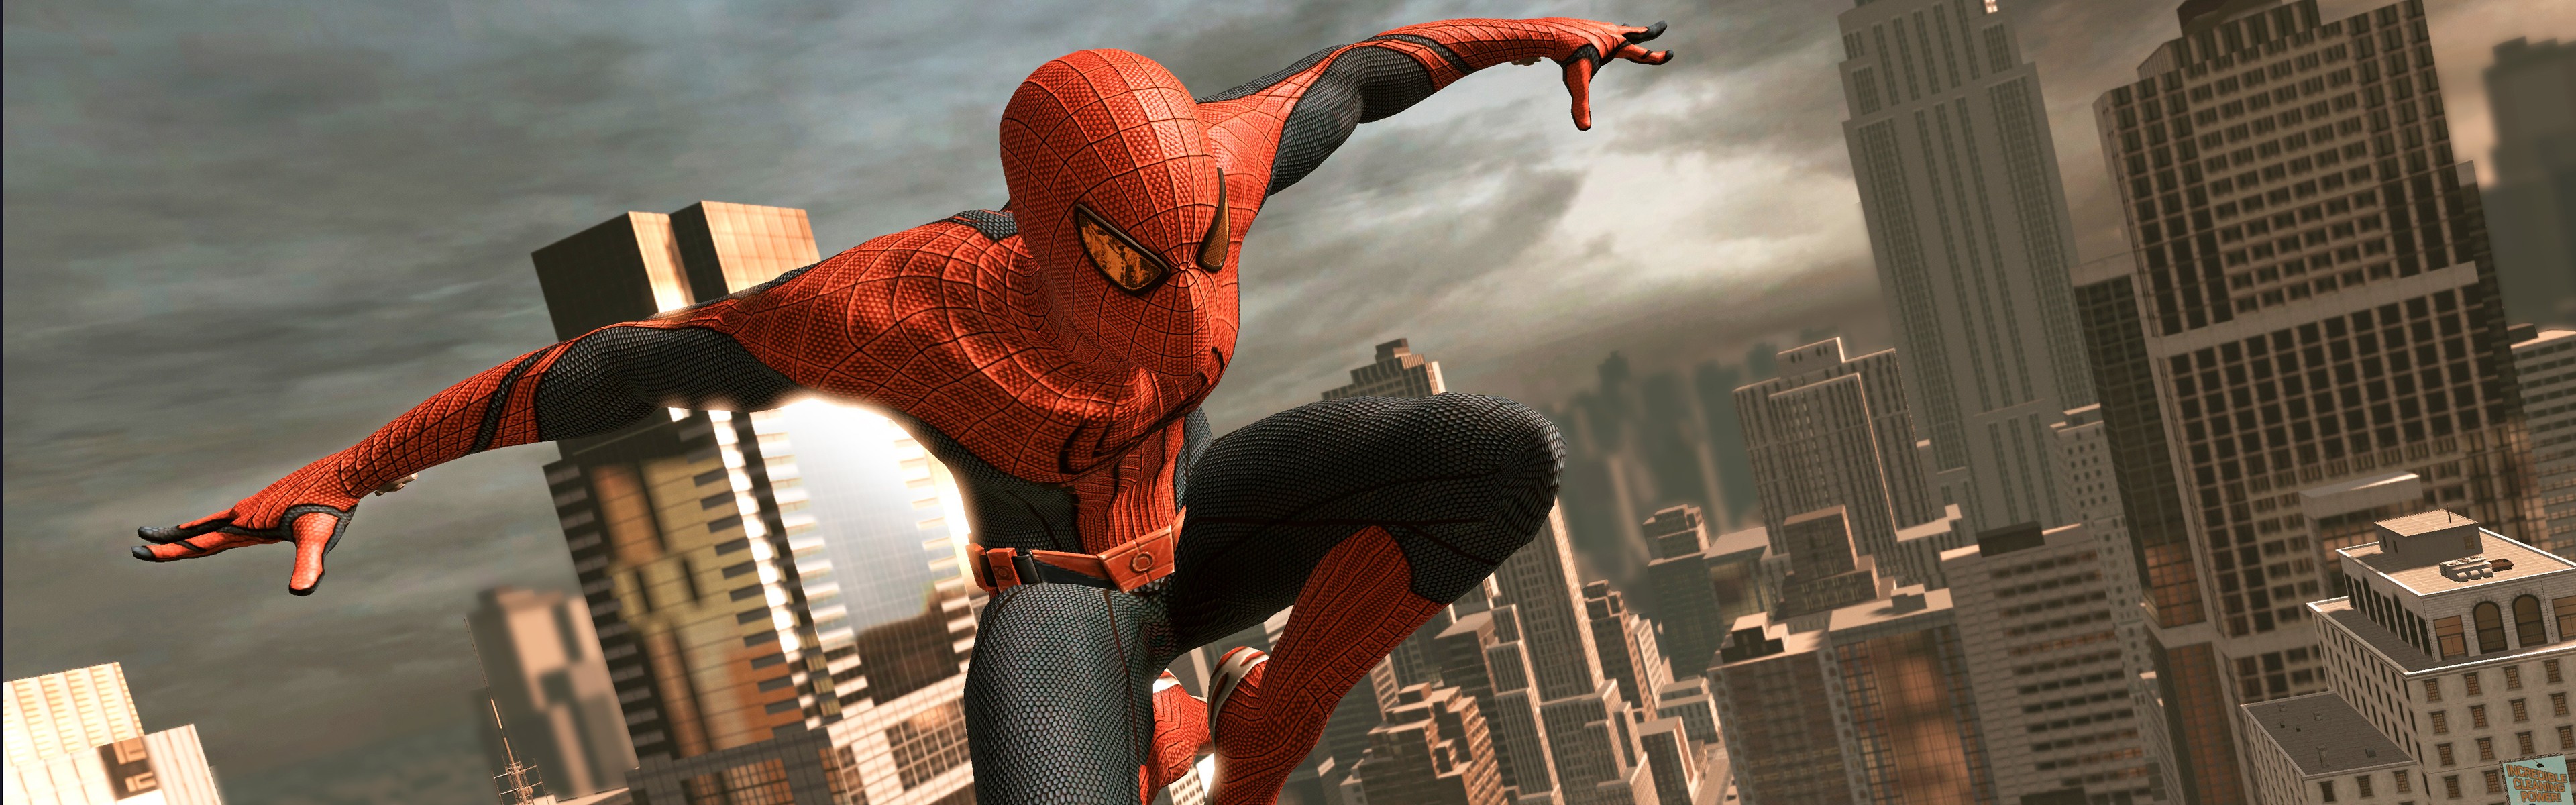 Amazing Spider Man Video Games City Manhattan Dual Monitors Multiple Display New York City Superhero 3840x1200